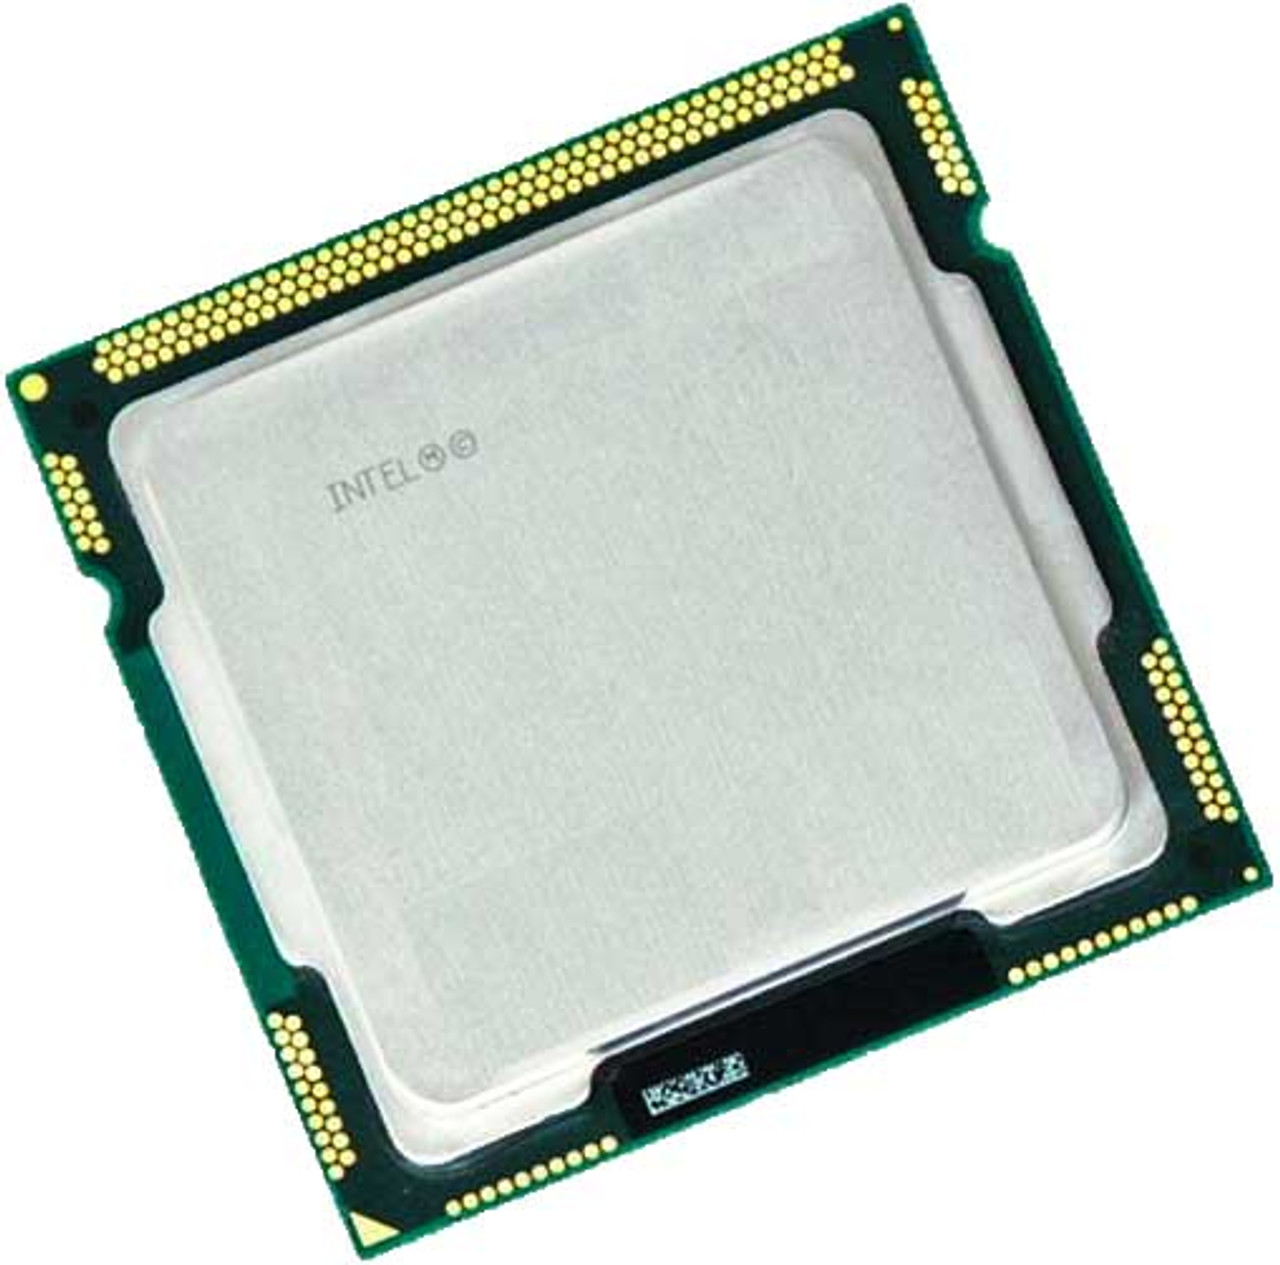 Intel Core i5-760 SLBRP 2.80 - 3.33 GHz, 8MB, 4 Core,Socket